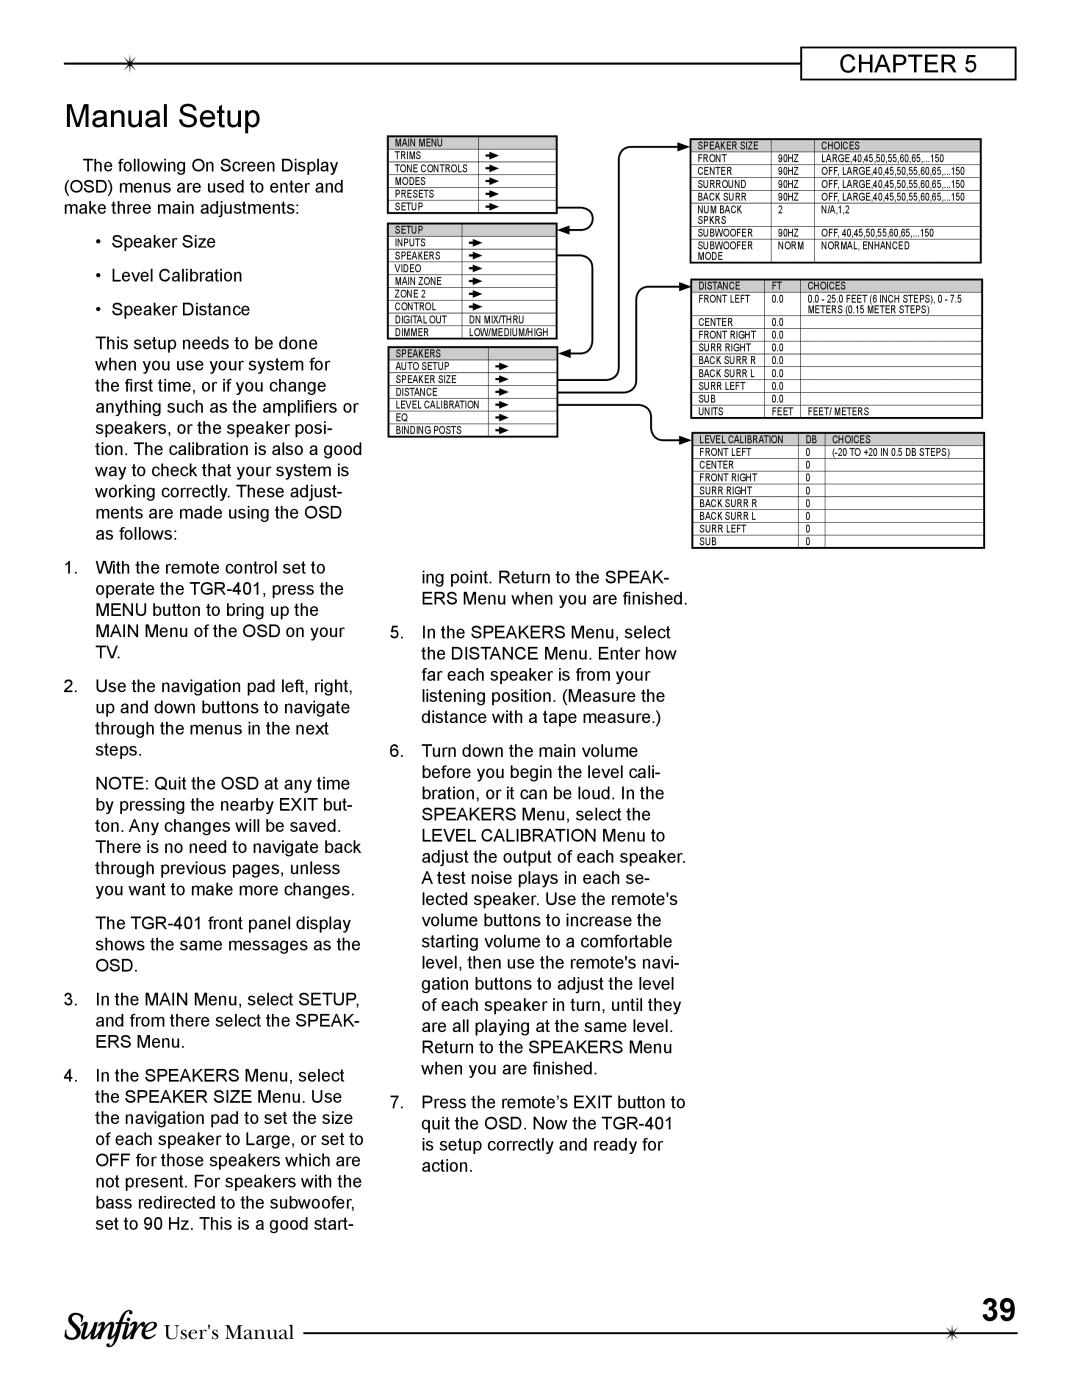 Sunfire TGR-401-230 manual Manual Setup, Users Manual 